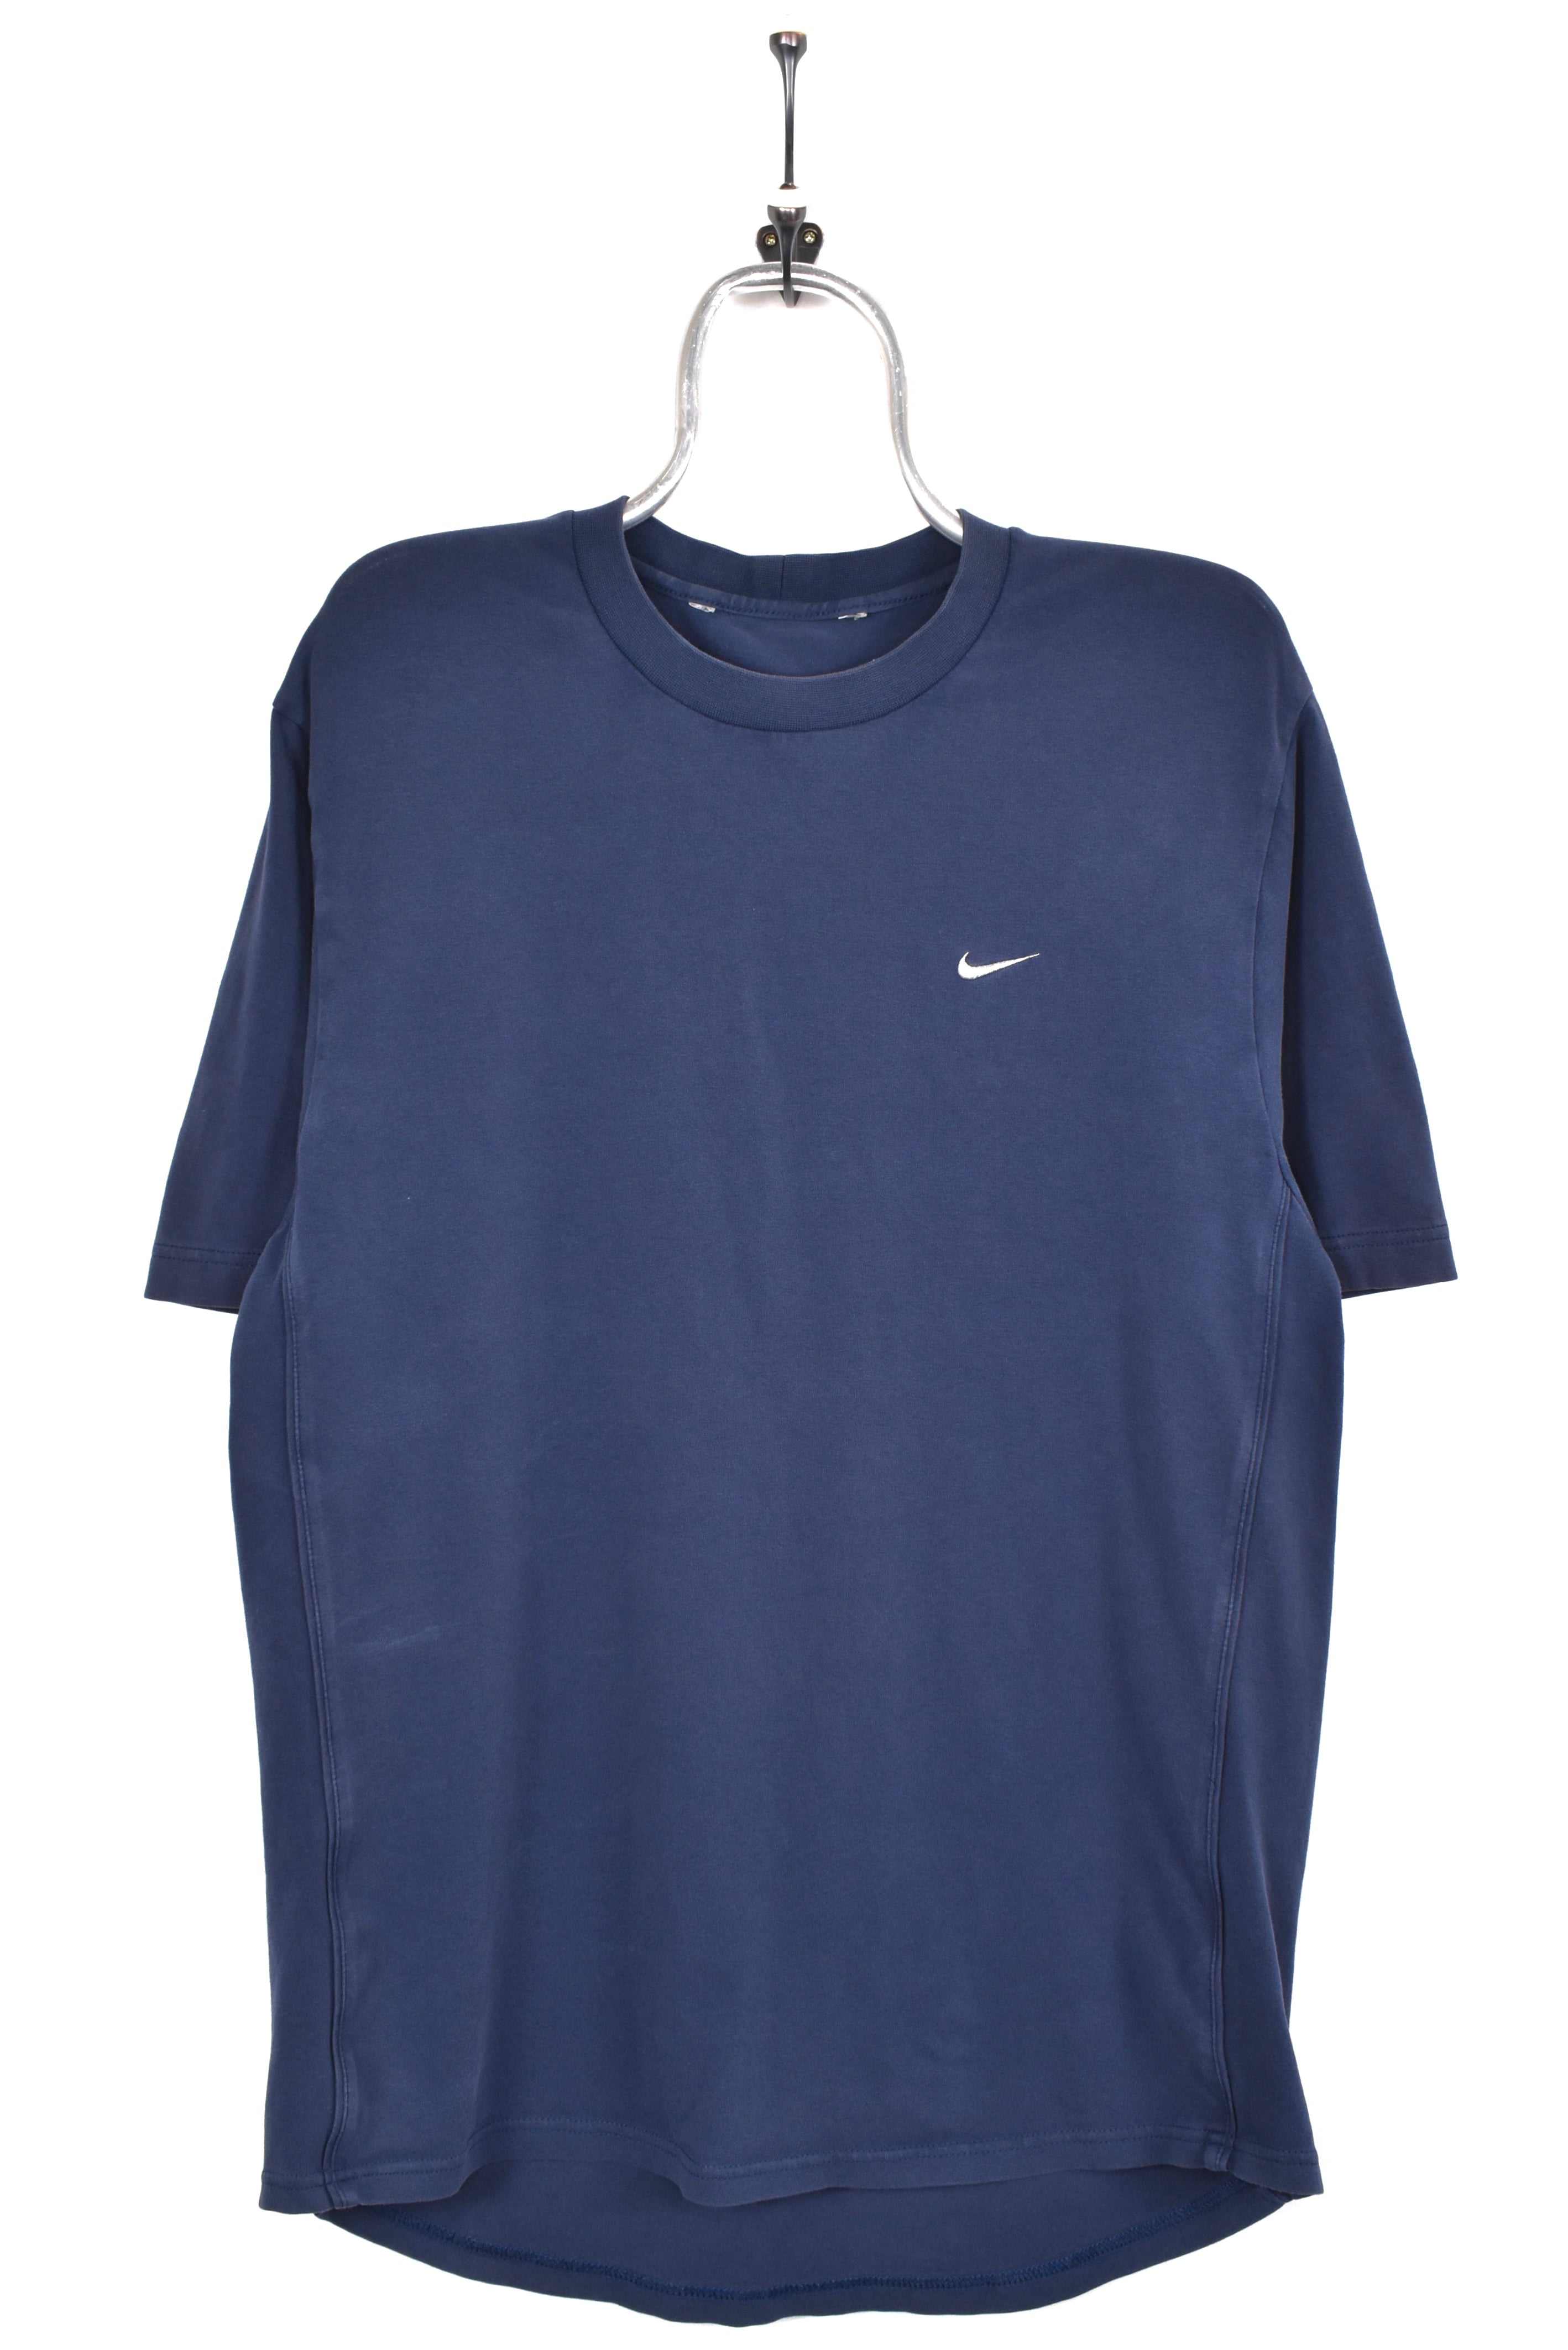 Vintage Nike shirt, Dri-fit navy blue embroidered tee - AU M NIKE